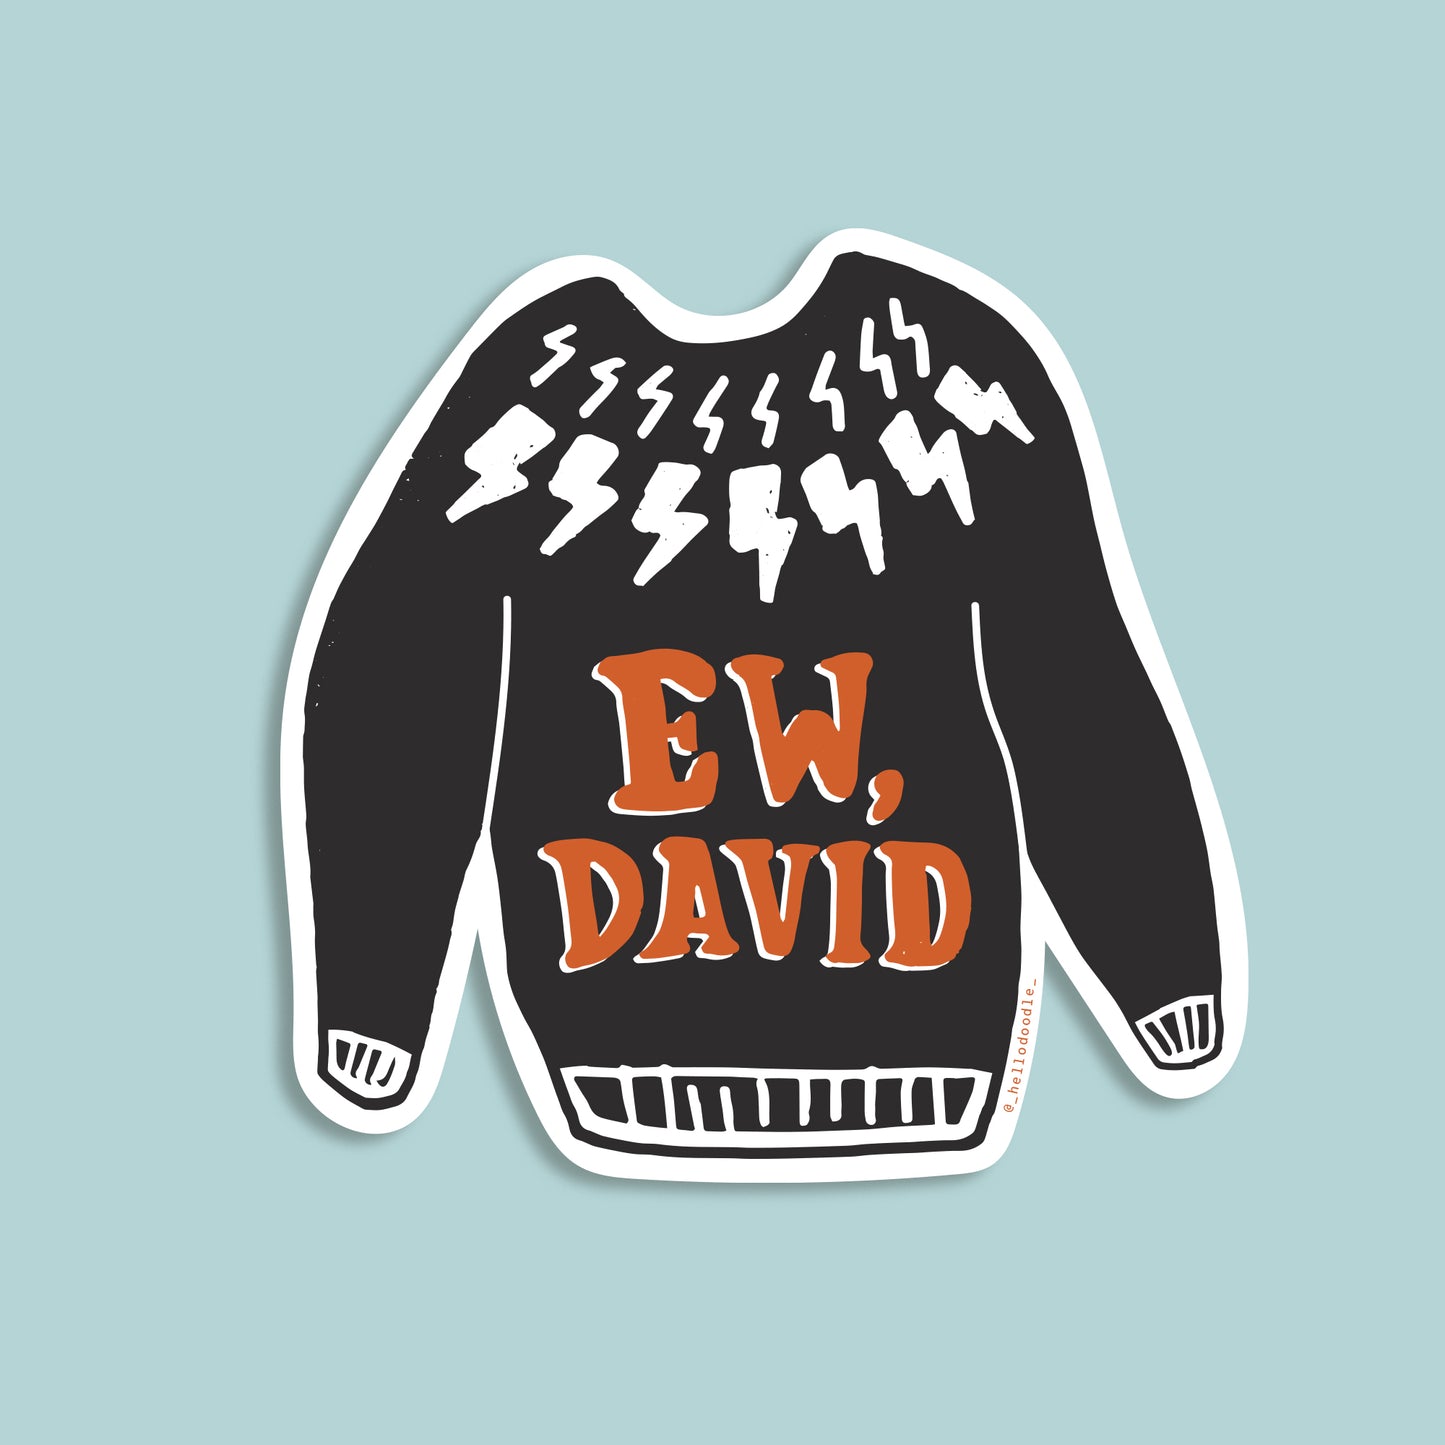 Ew, David! Sweater Sticker